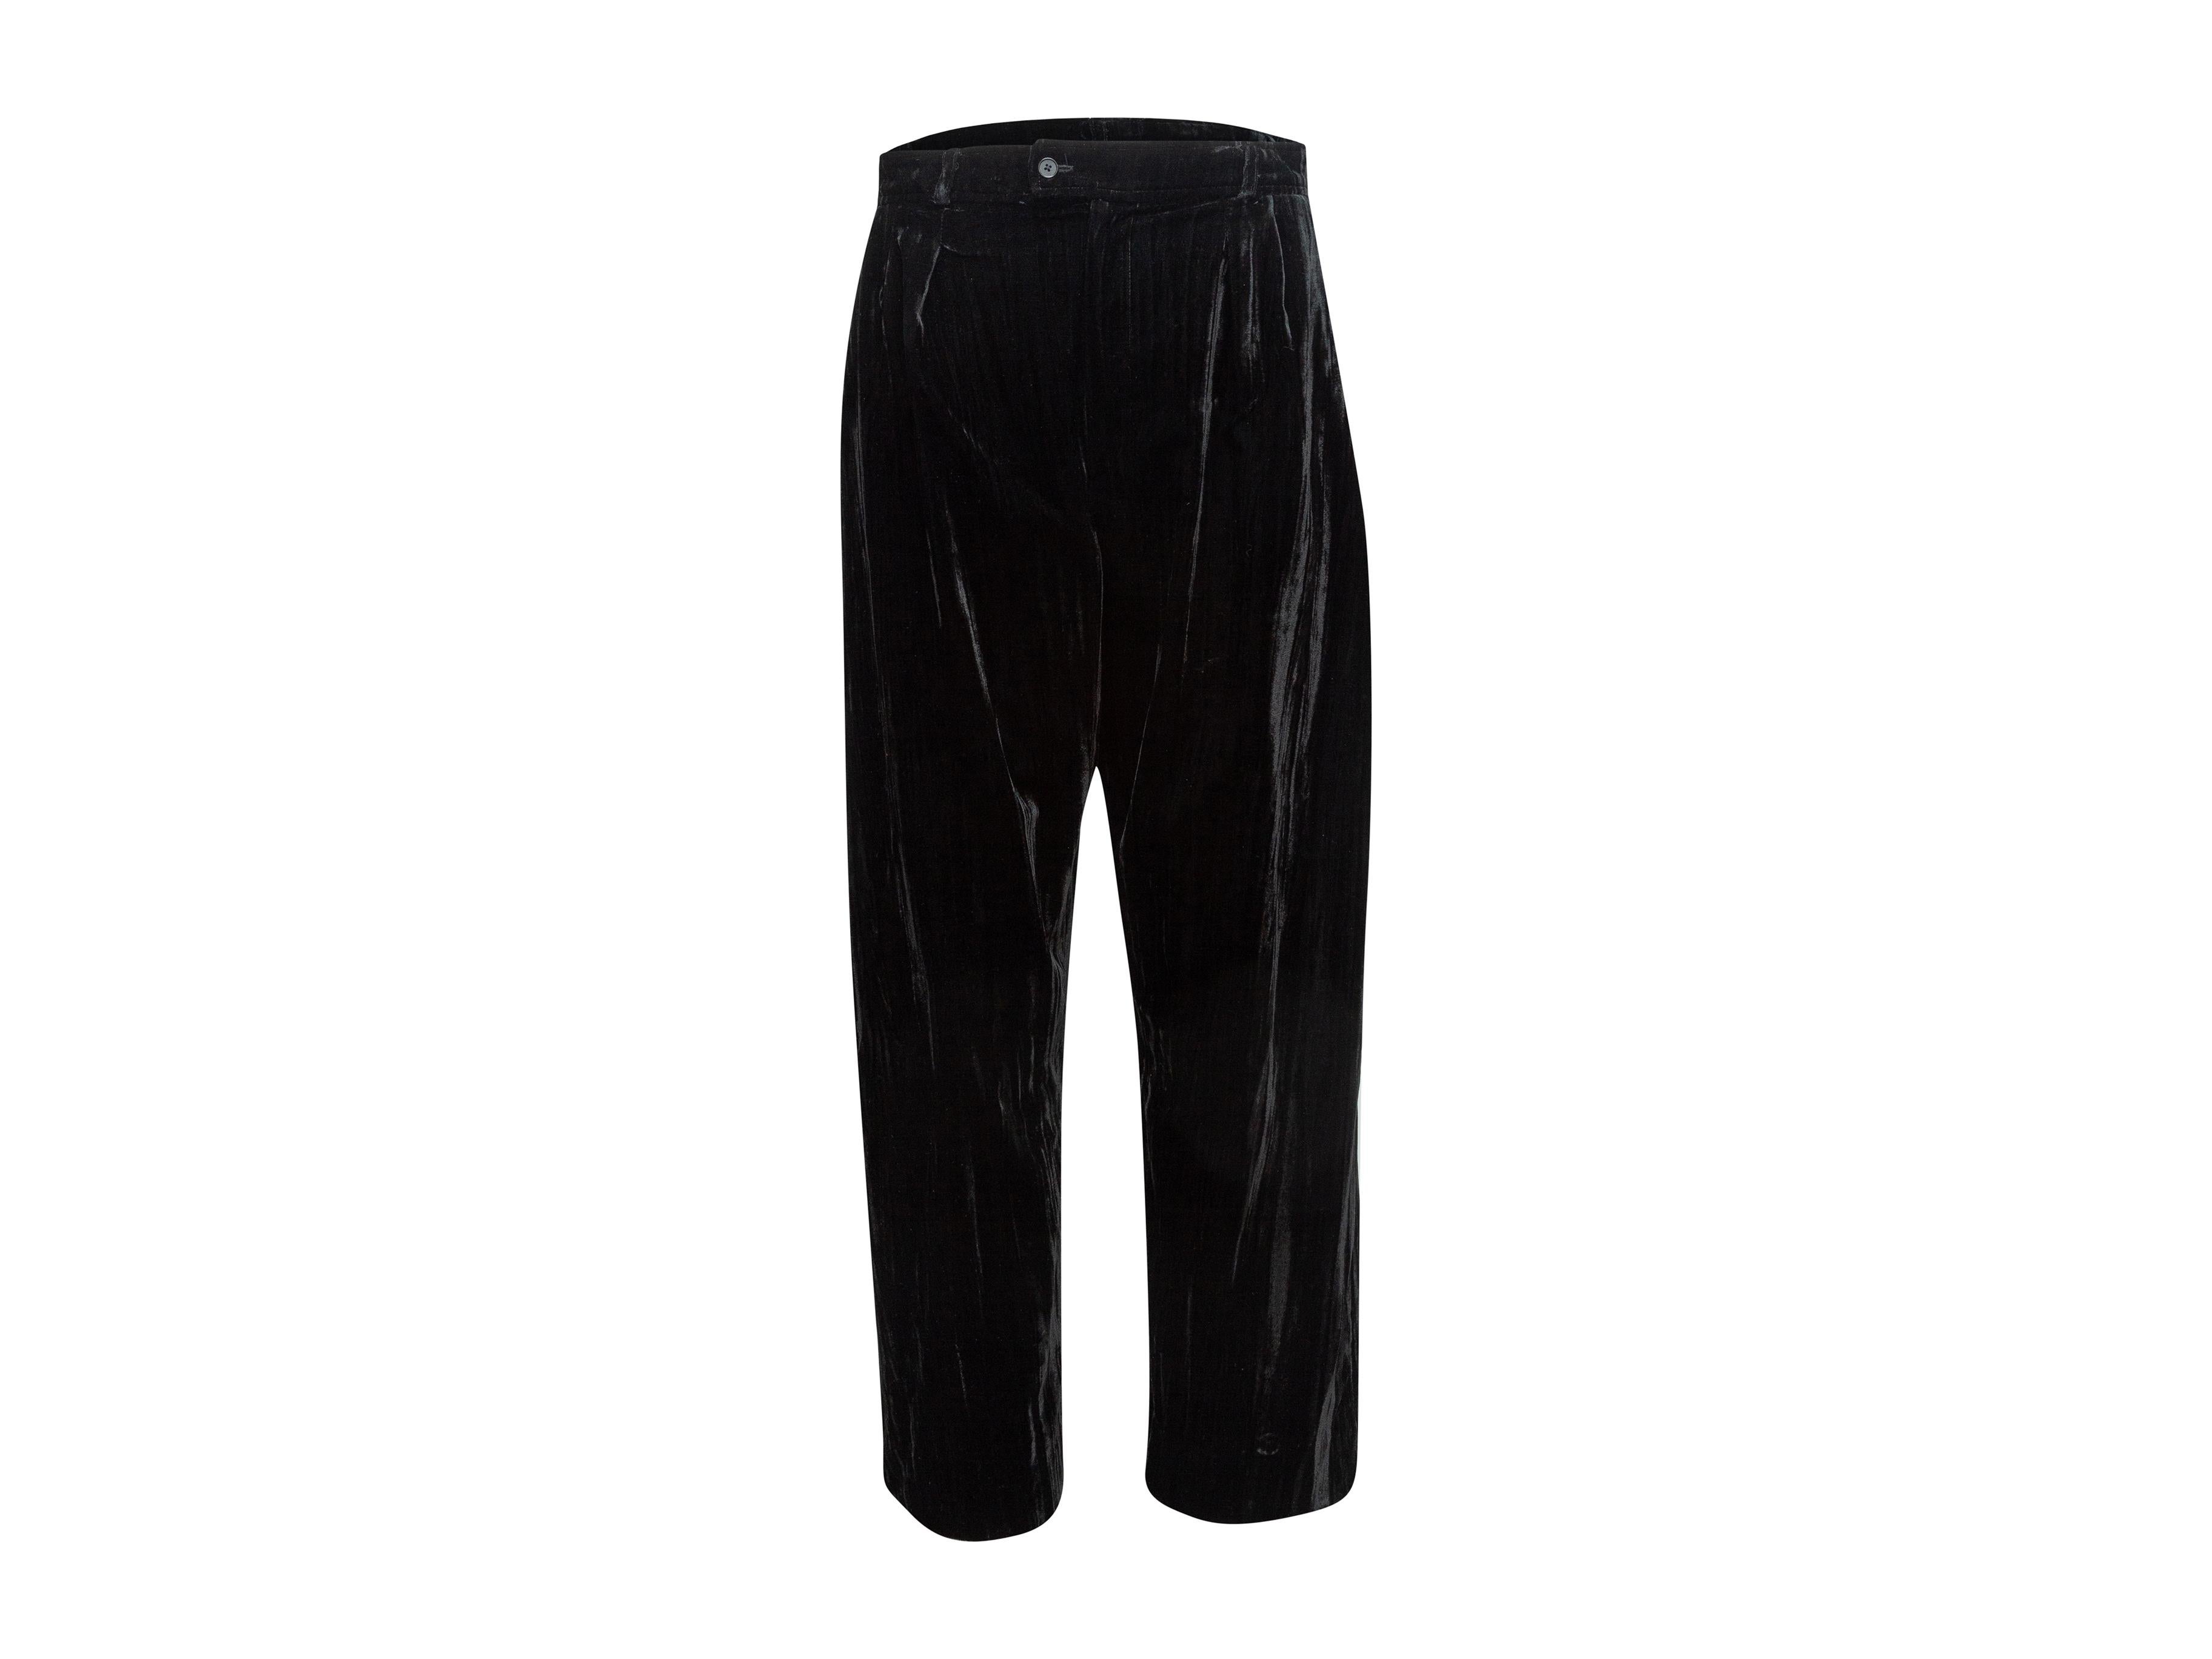 Product details: Vintage black velvet pants by Yves Saint Laurent. Circa 1990s. Dual hip pockets. Zip-fly closure. 32